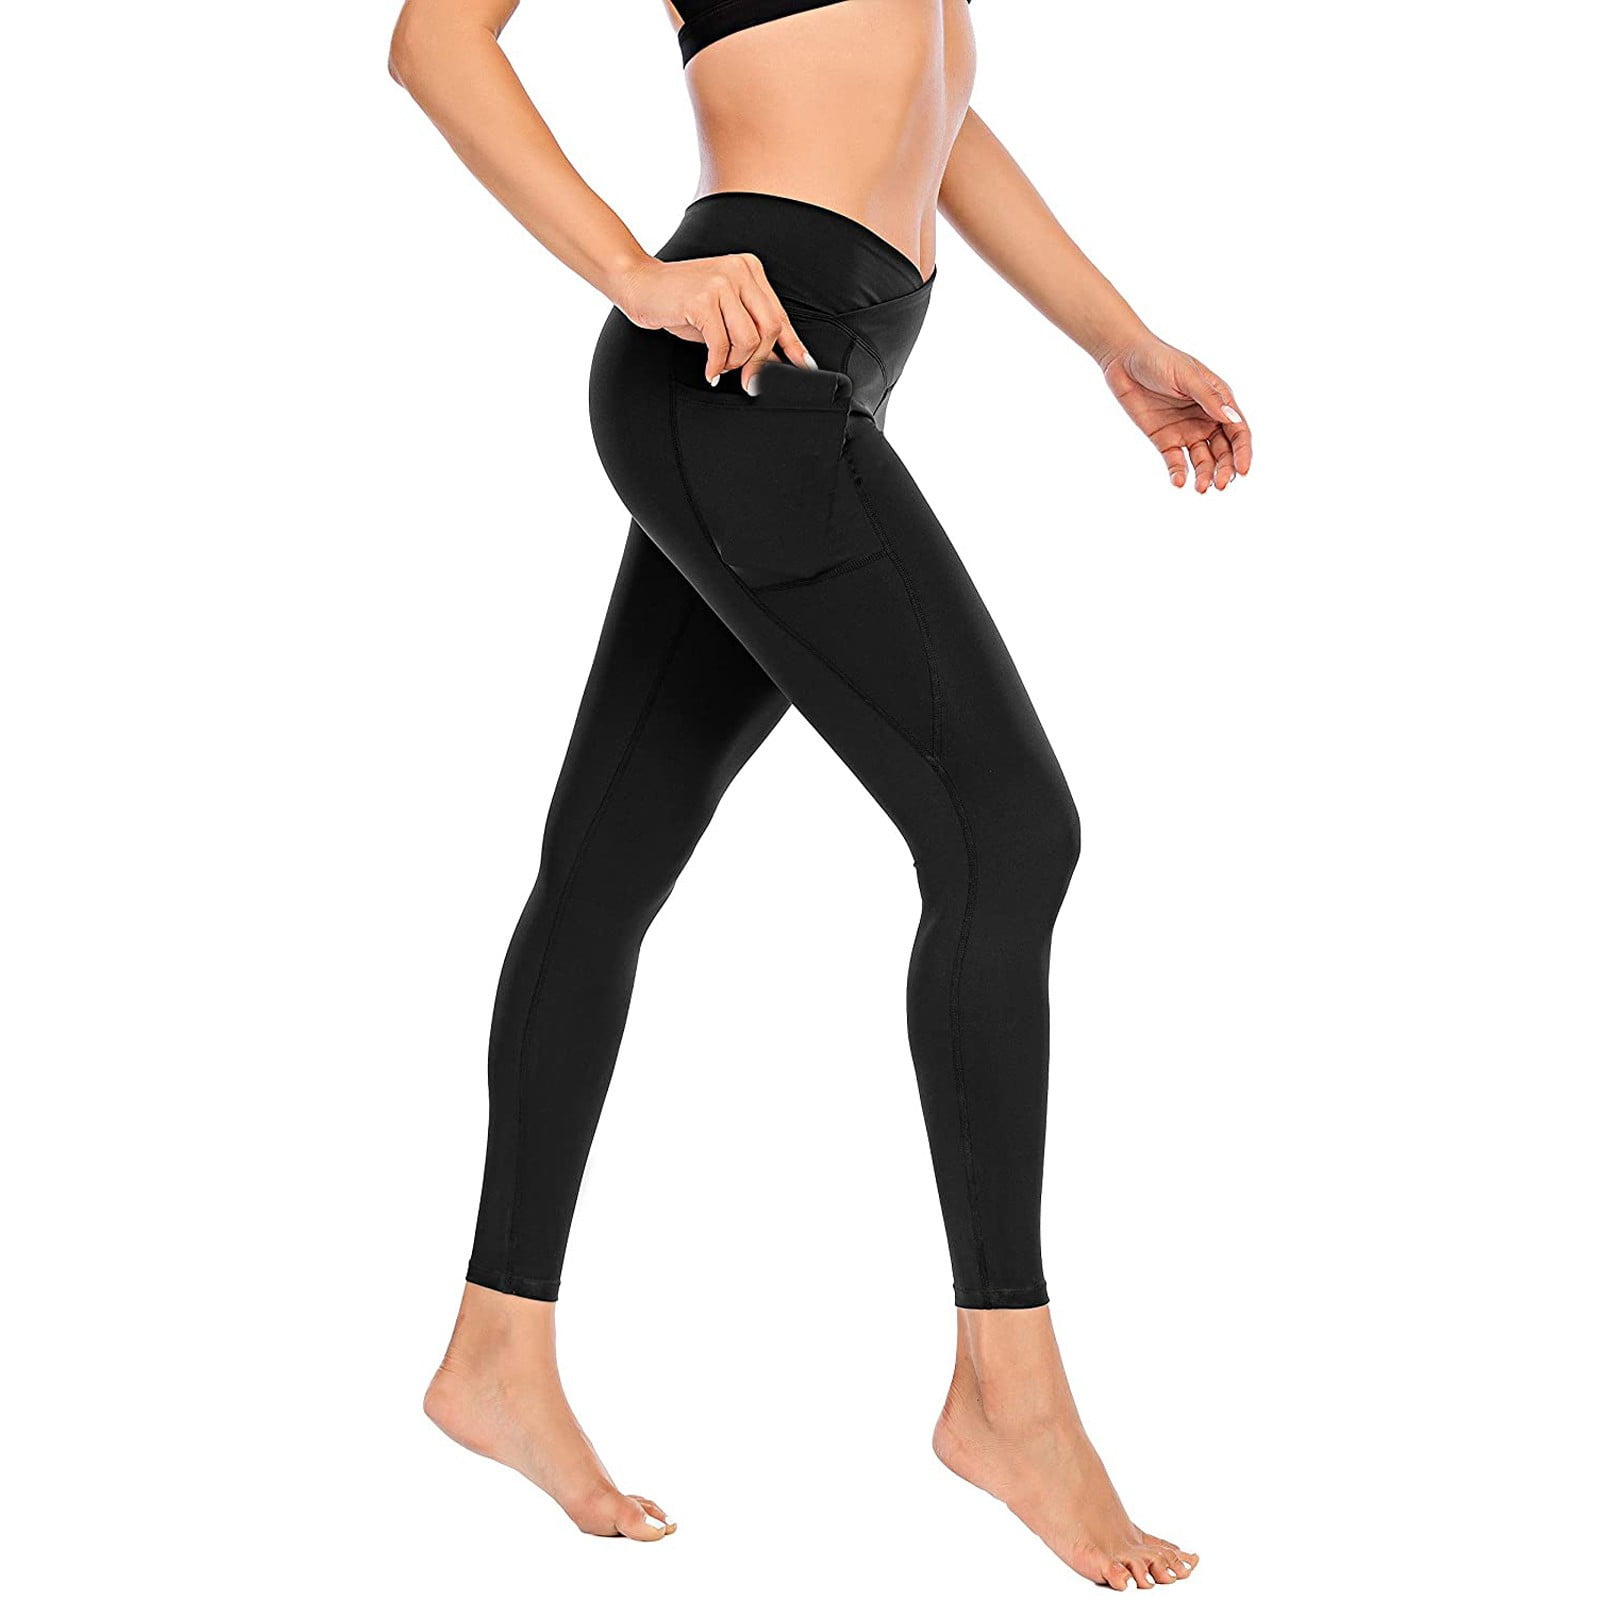 HSMQHJWE Yoga Pants Medium Petite Women Workout Out Pocket